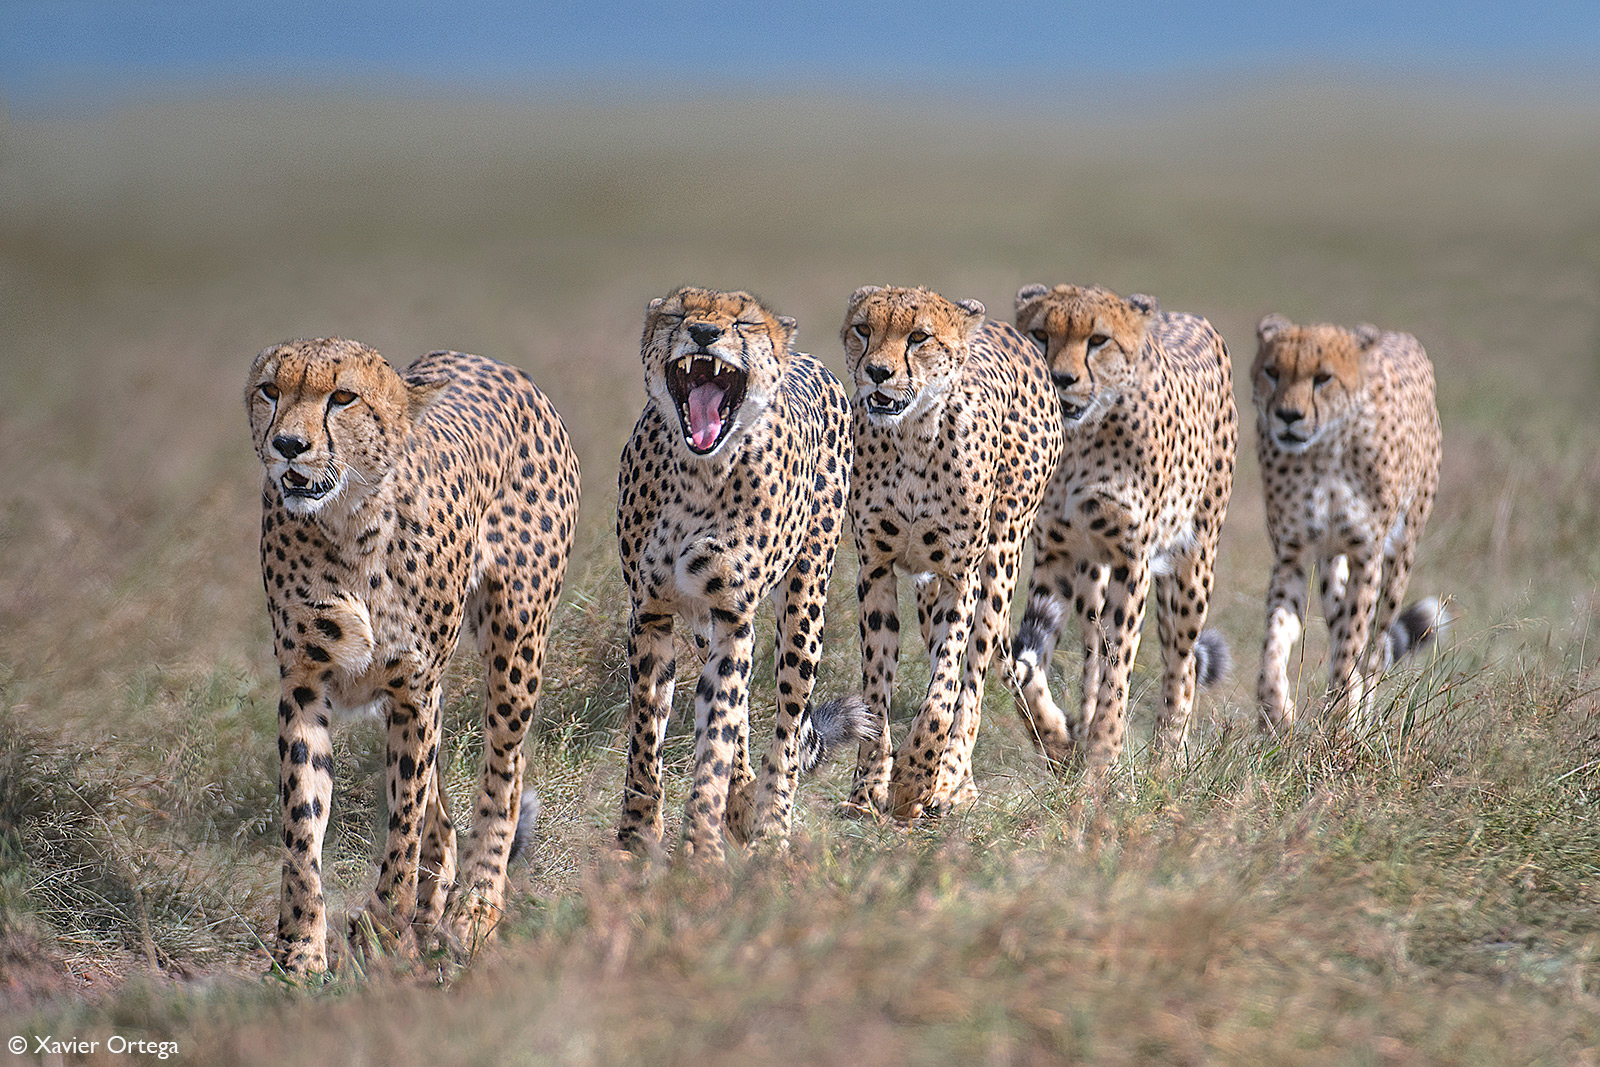 Xavier-Ortega-Cheetah-The-five-musketeers-Masai-Mara-Kenya.jpg